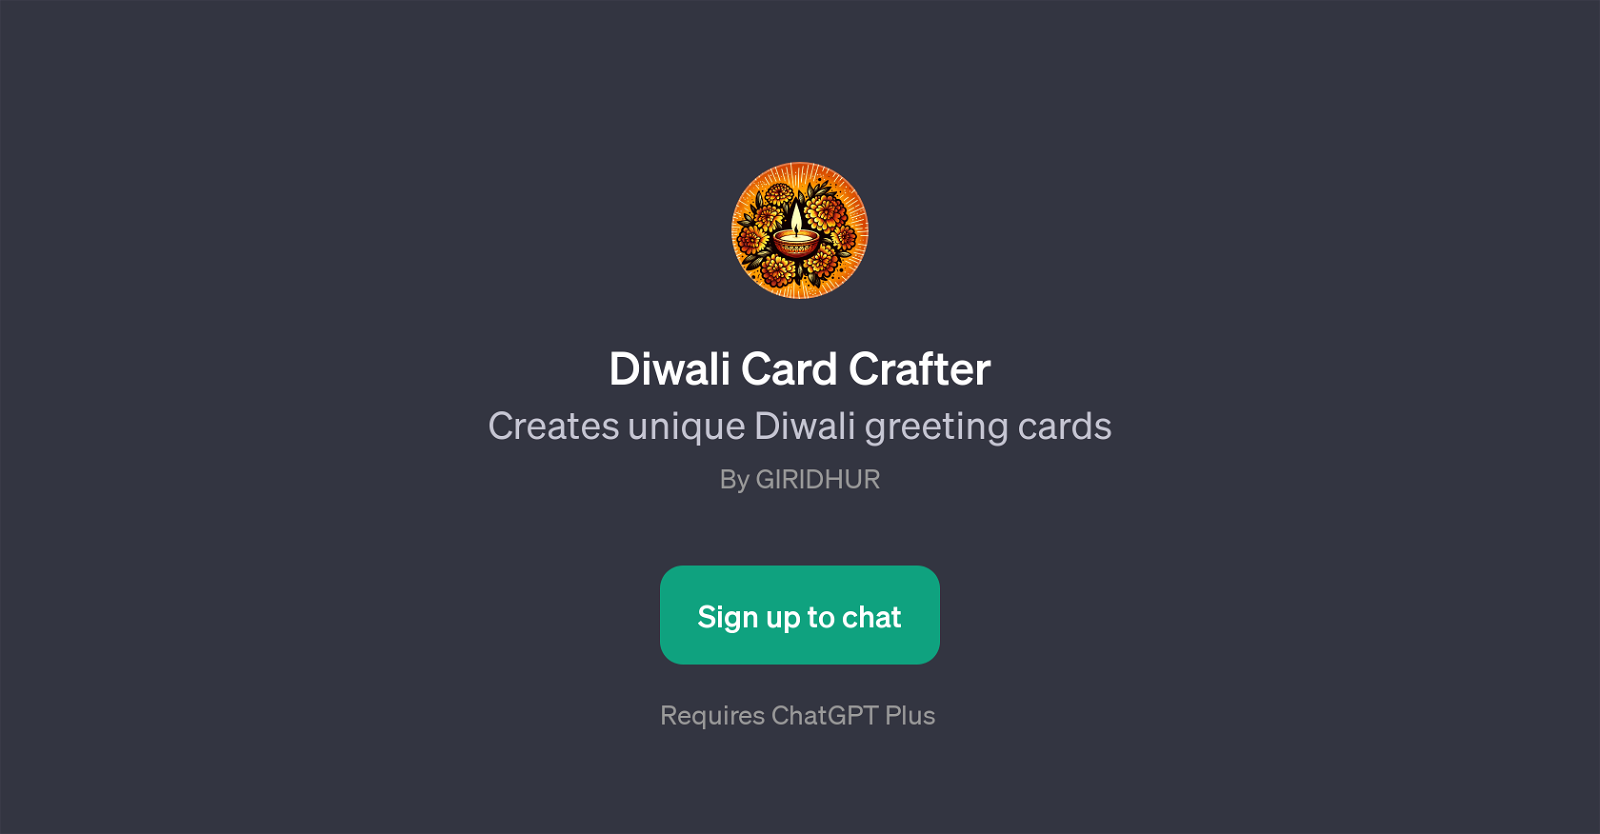 Diwali Card Crafter website